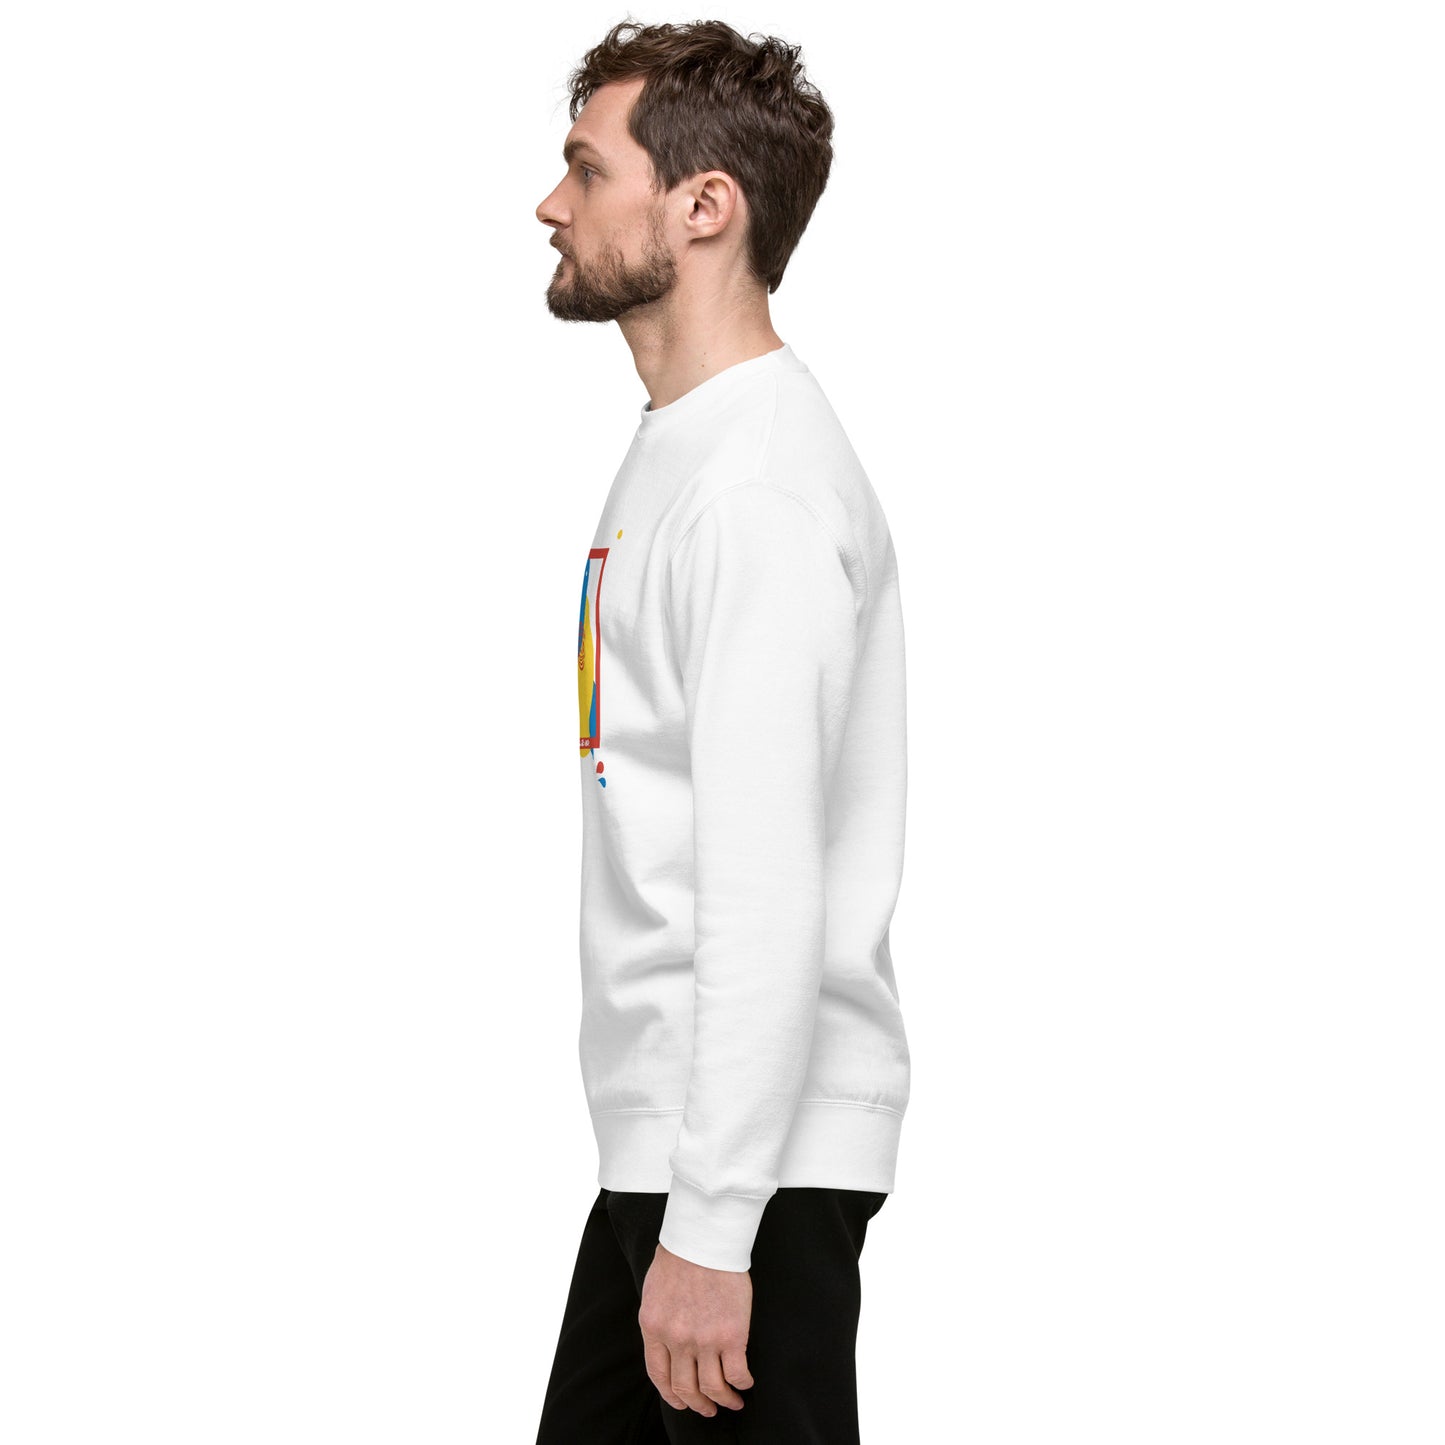 ARTIST Sweatshirt (White)